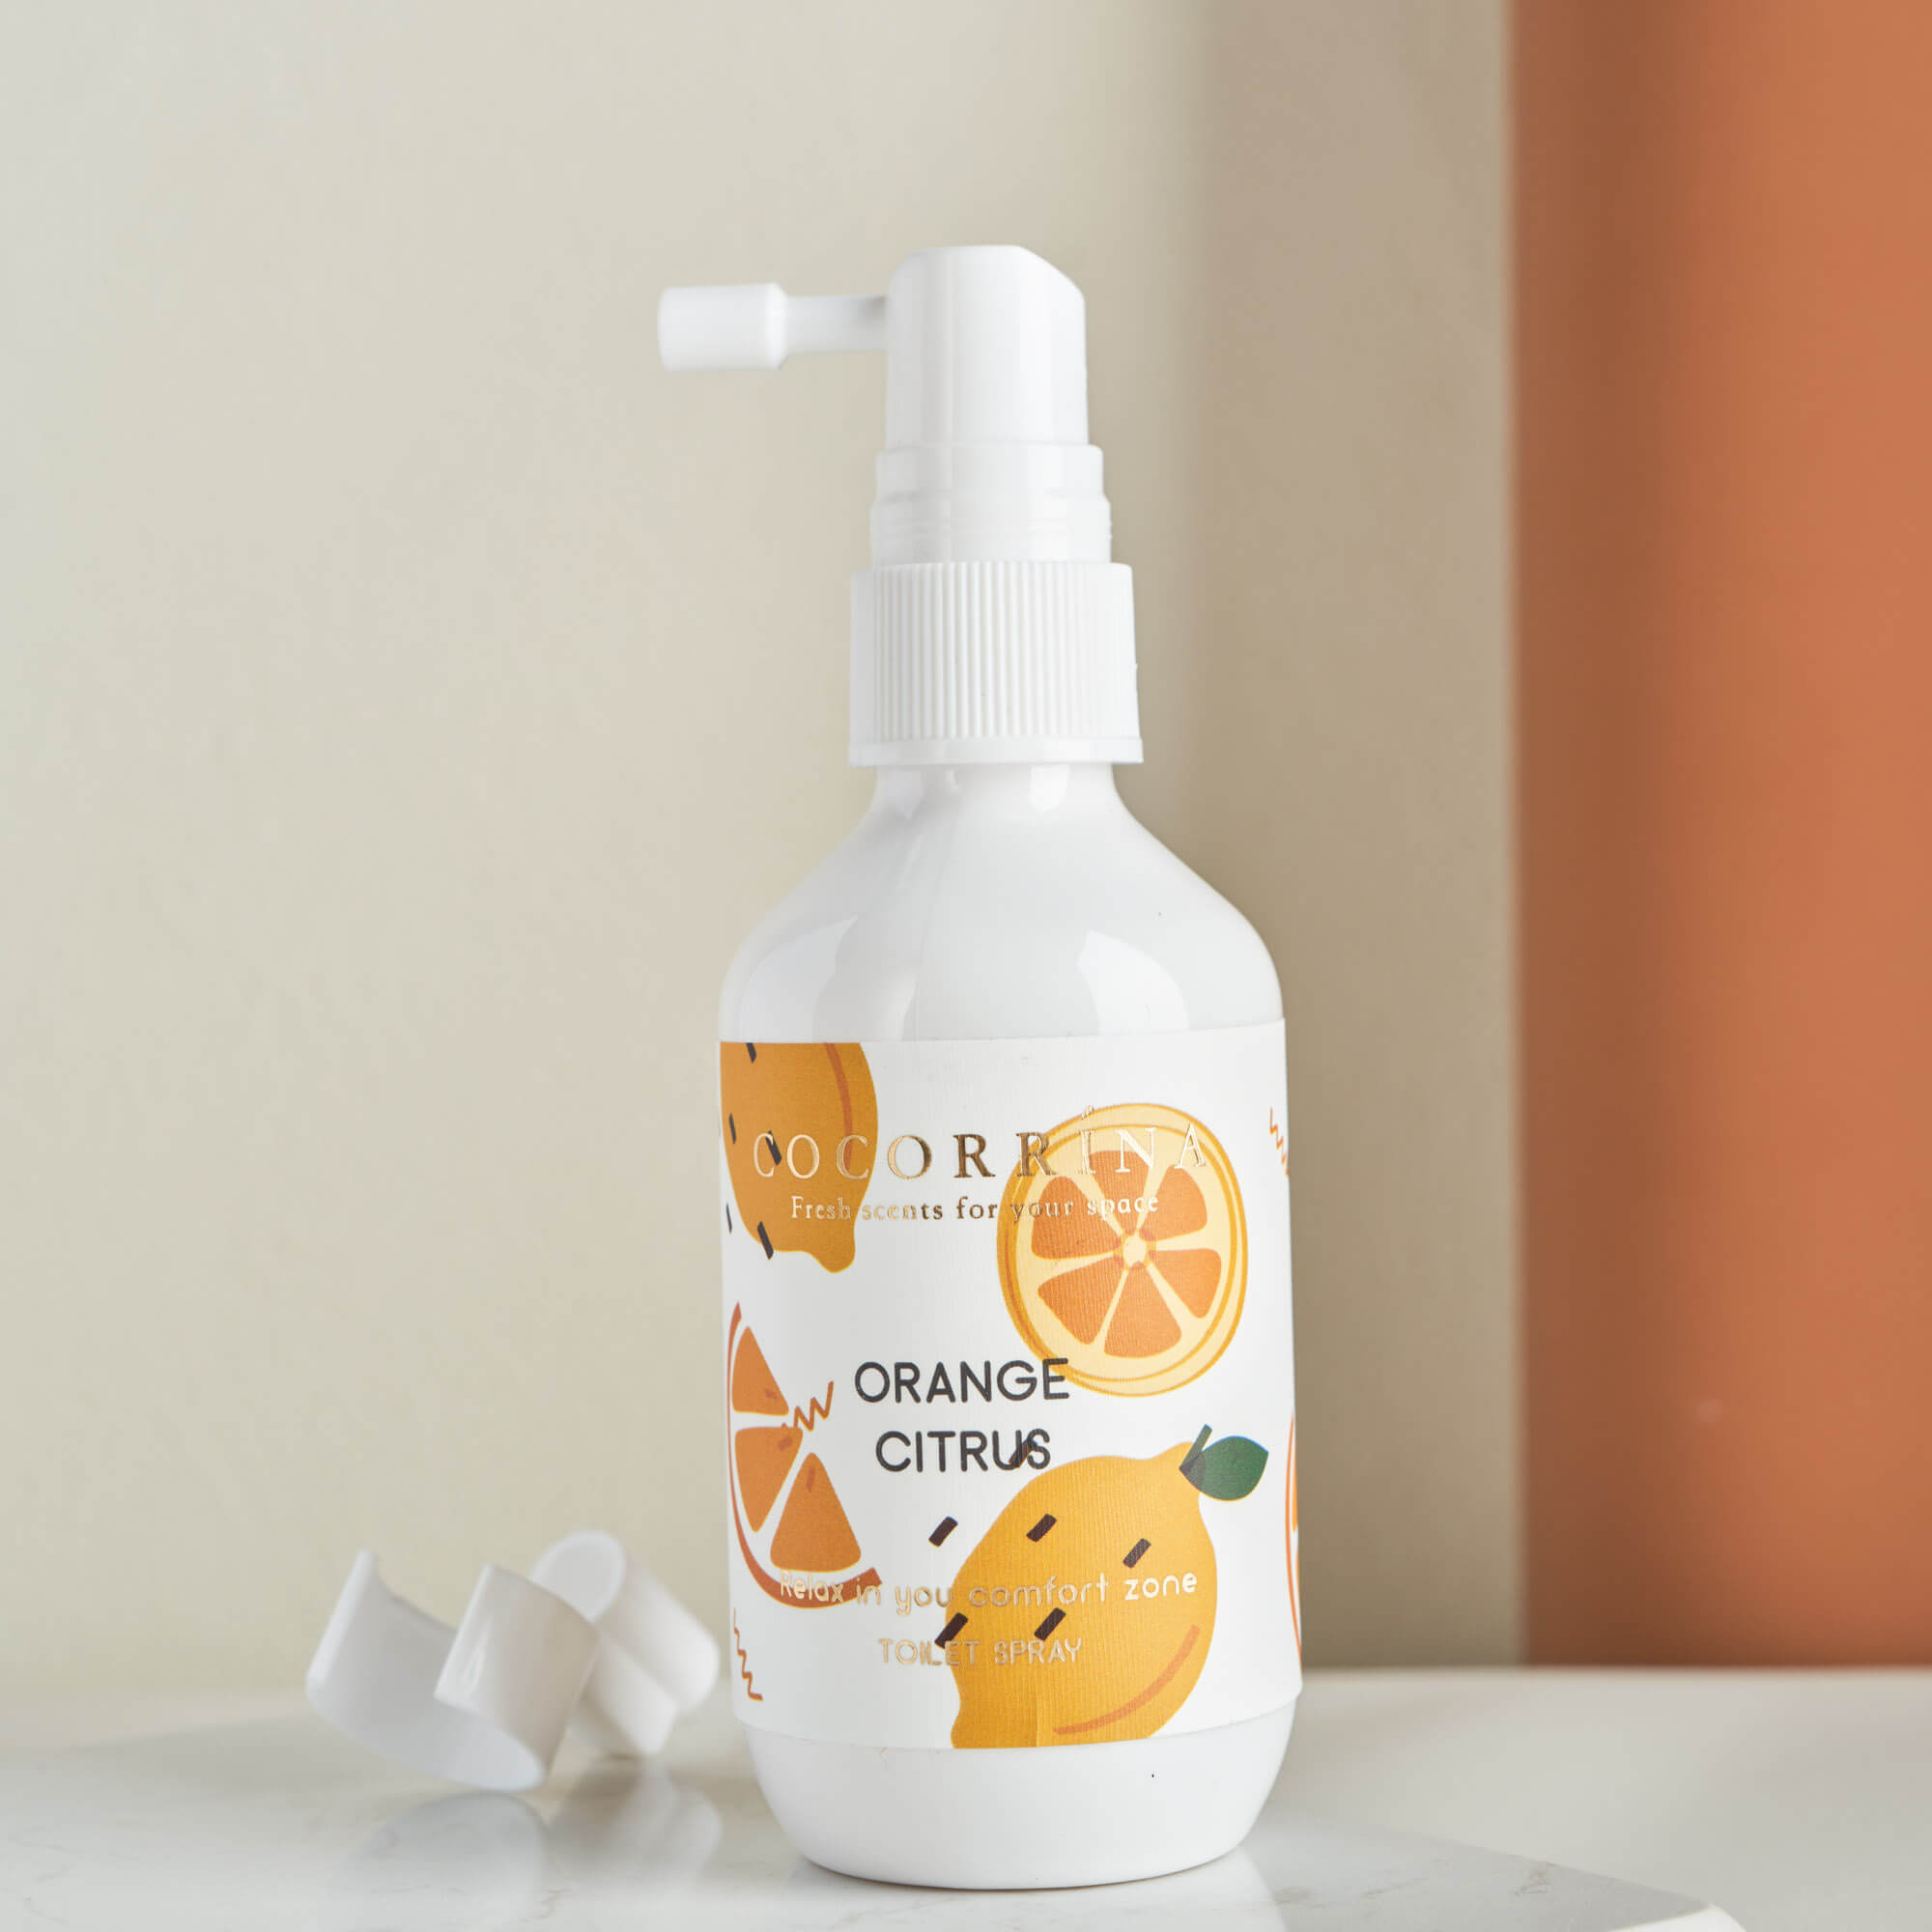 Spray de toilette aux agrumes Orange cocorrina